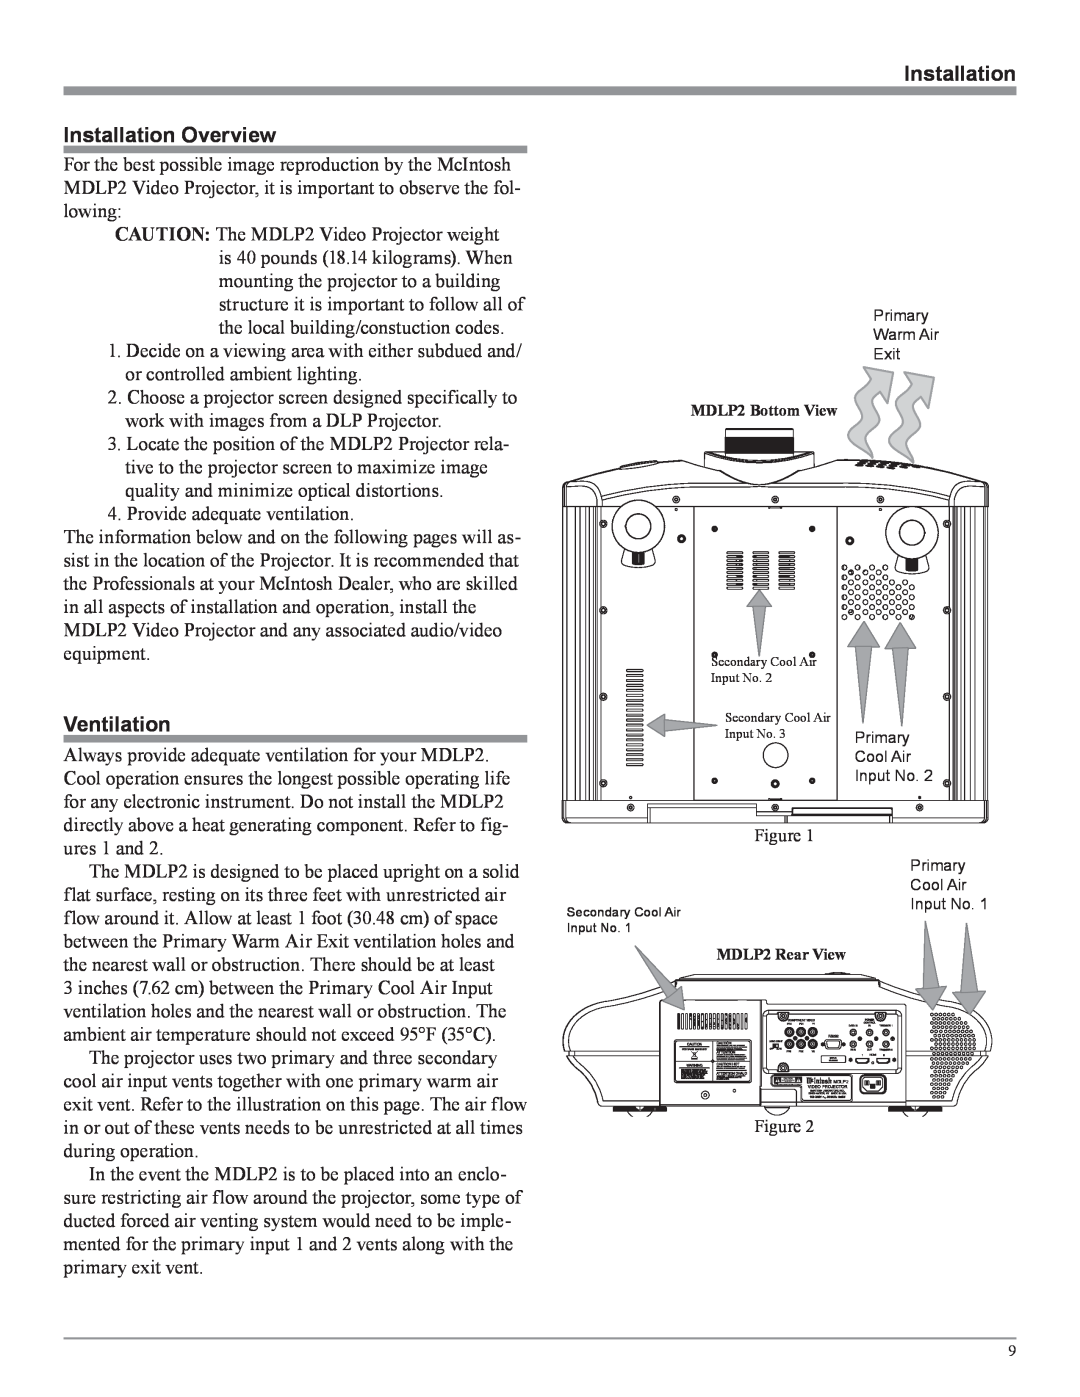 McIntosh MDLP2 owner manual Installation Overview, Ventilation 